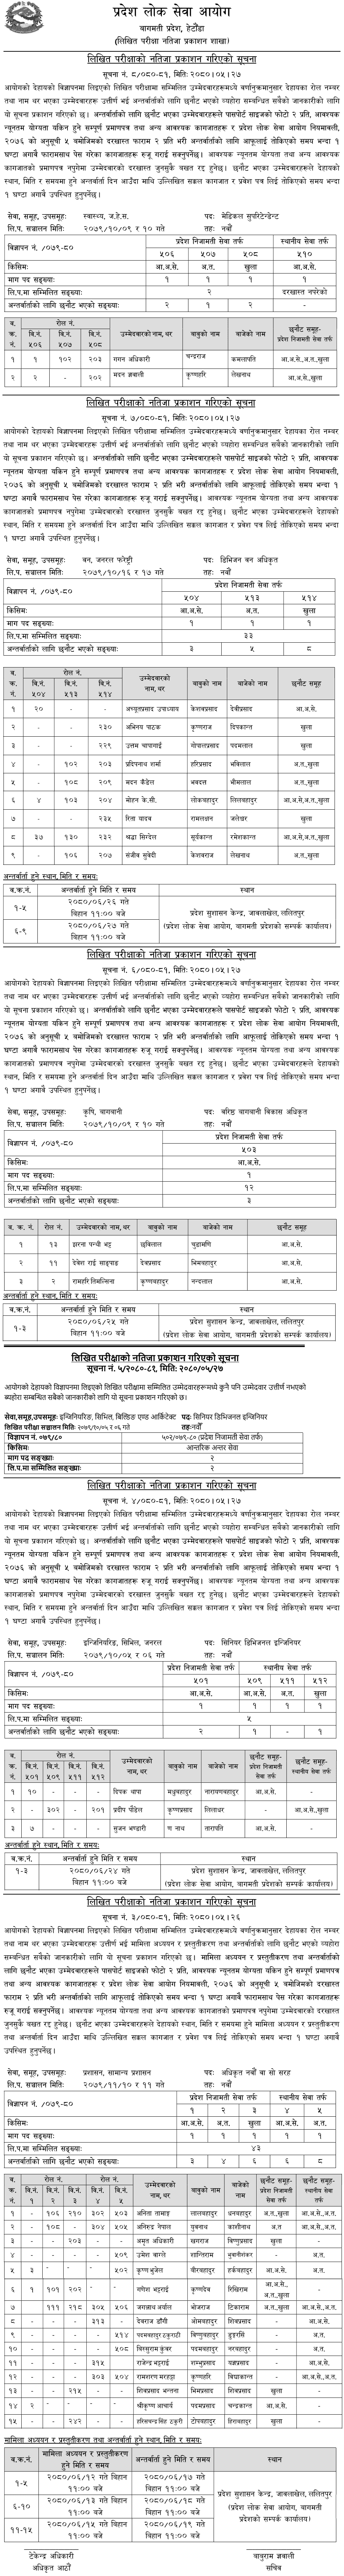 Bagmati Pradesh Lok Sewa Aayog Written Exam Result of 9th Level Officer (Various Services)